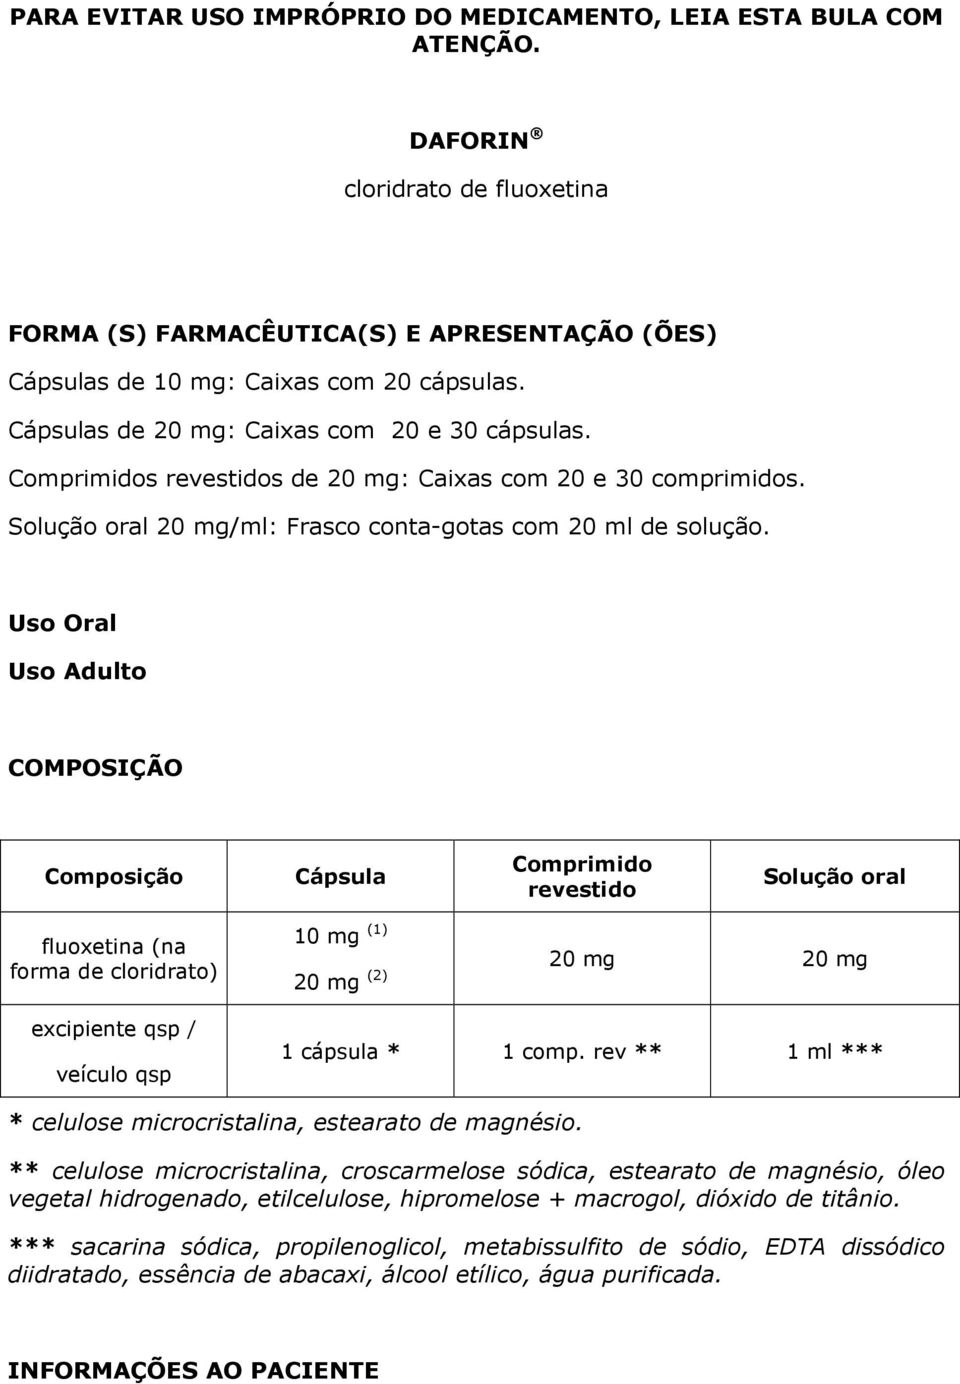 Daforin, PDF, Antidepressivo